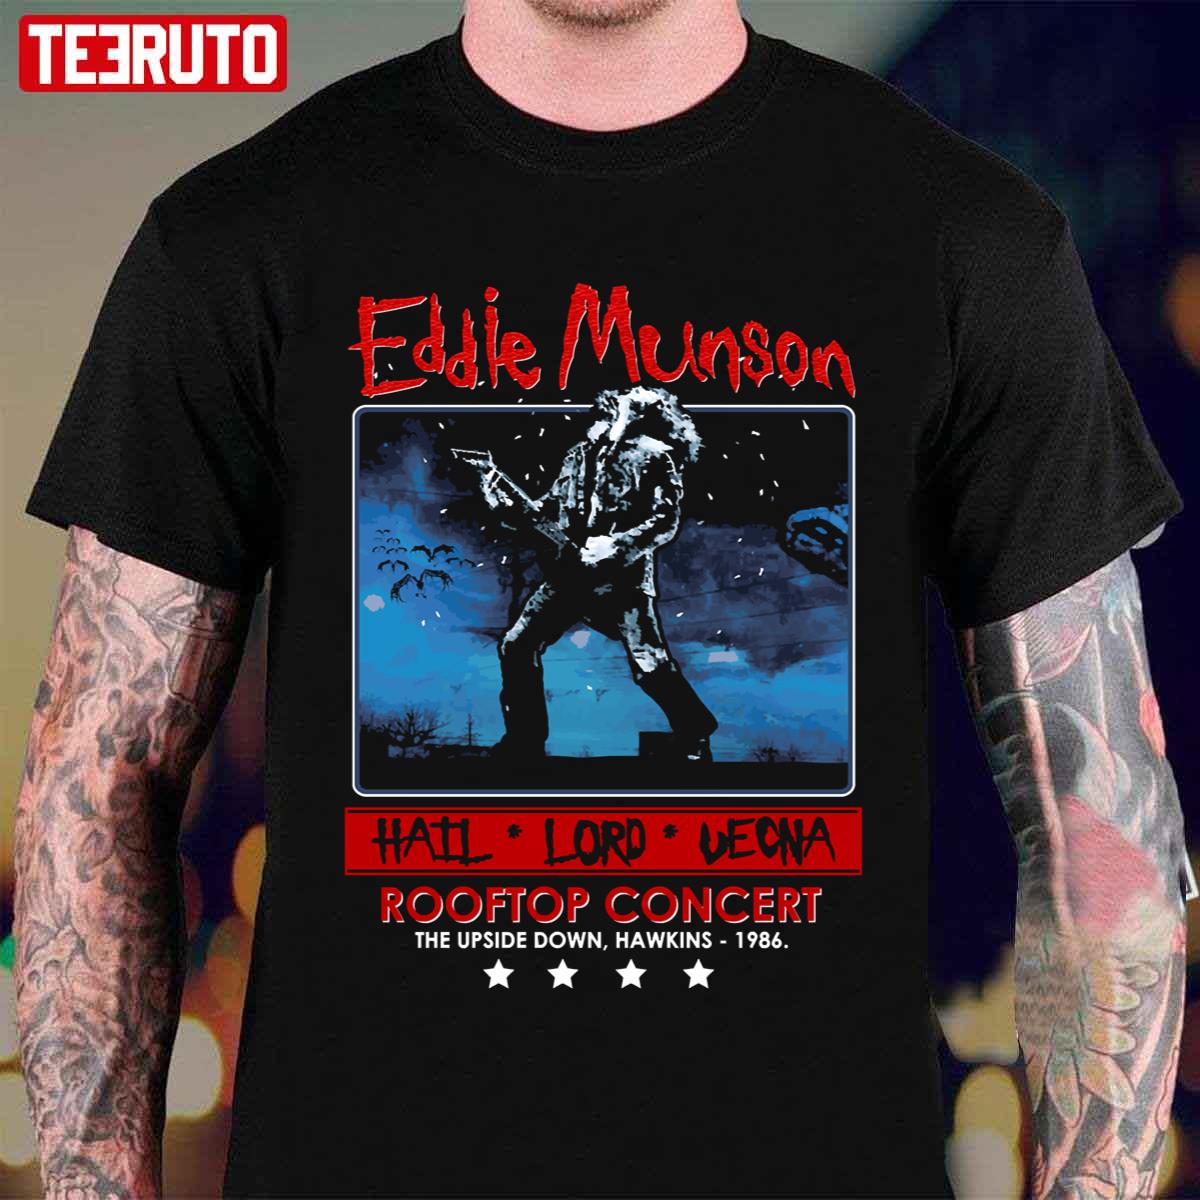 Eddie Munson’s Rooftop Concert Unisex T-Shirt